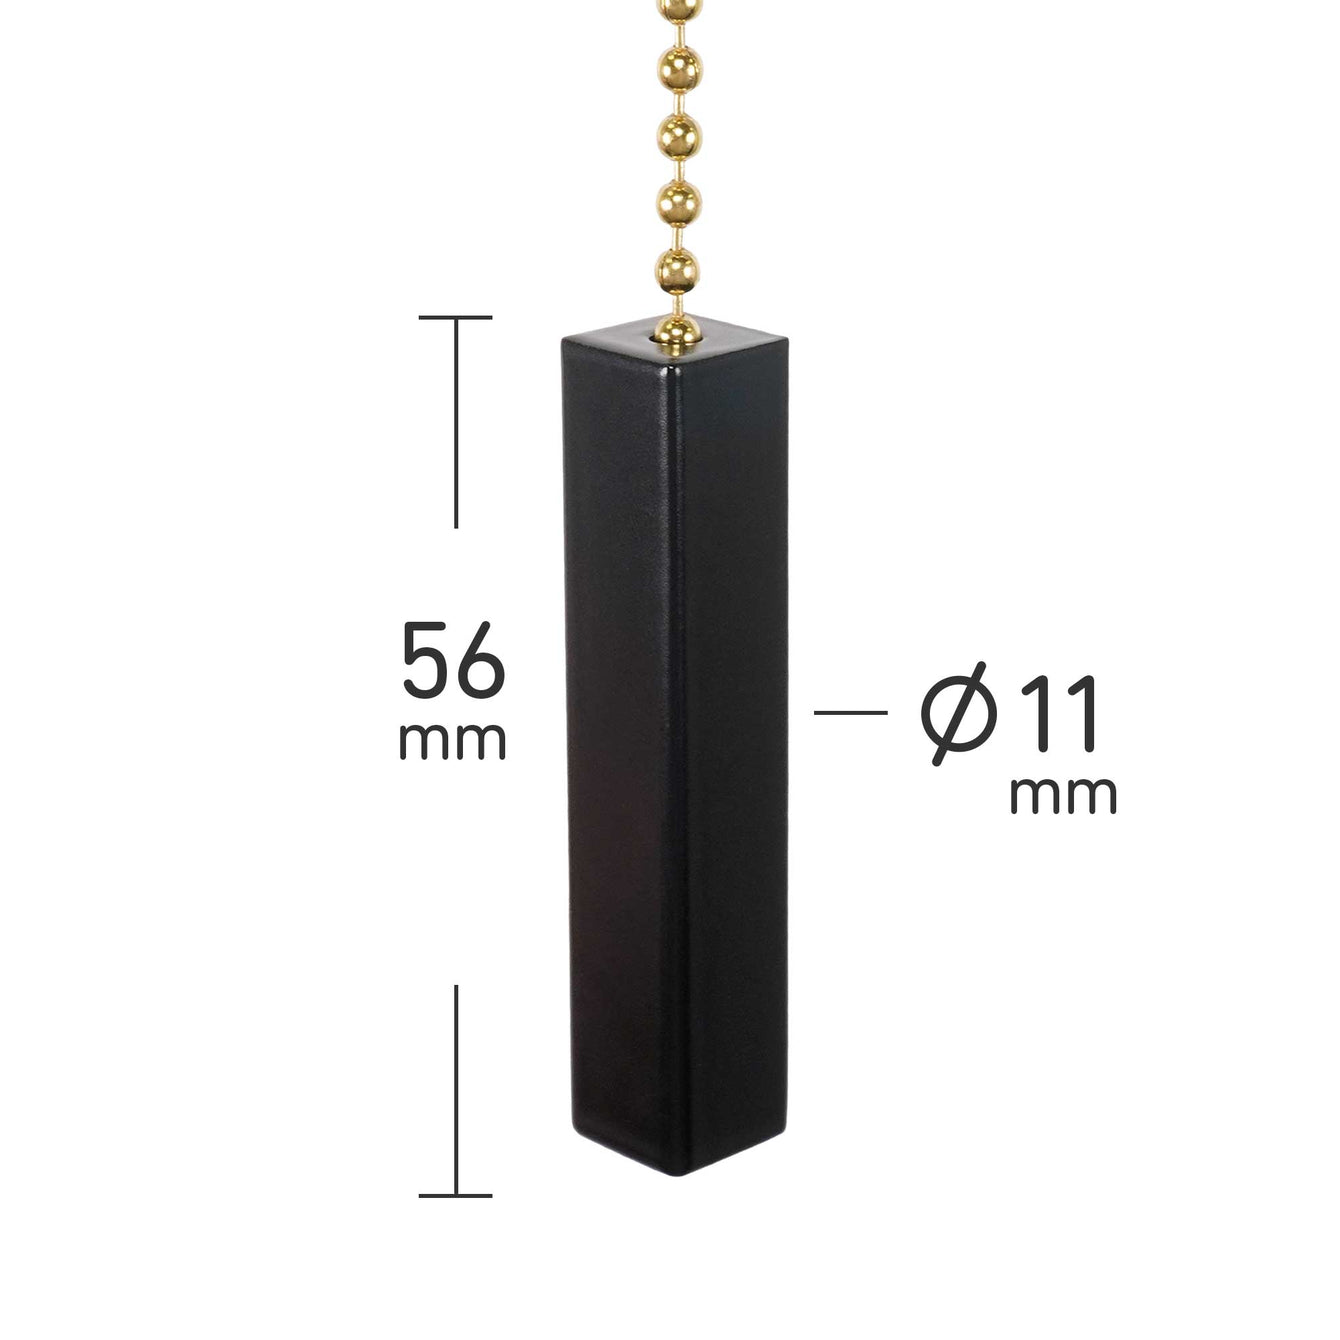 ElekTek Premium Matt Black Bathroom Light Pull Cord Switch Kit with Pull Chain Handle Black Cylinder / Cord